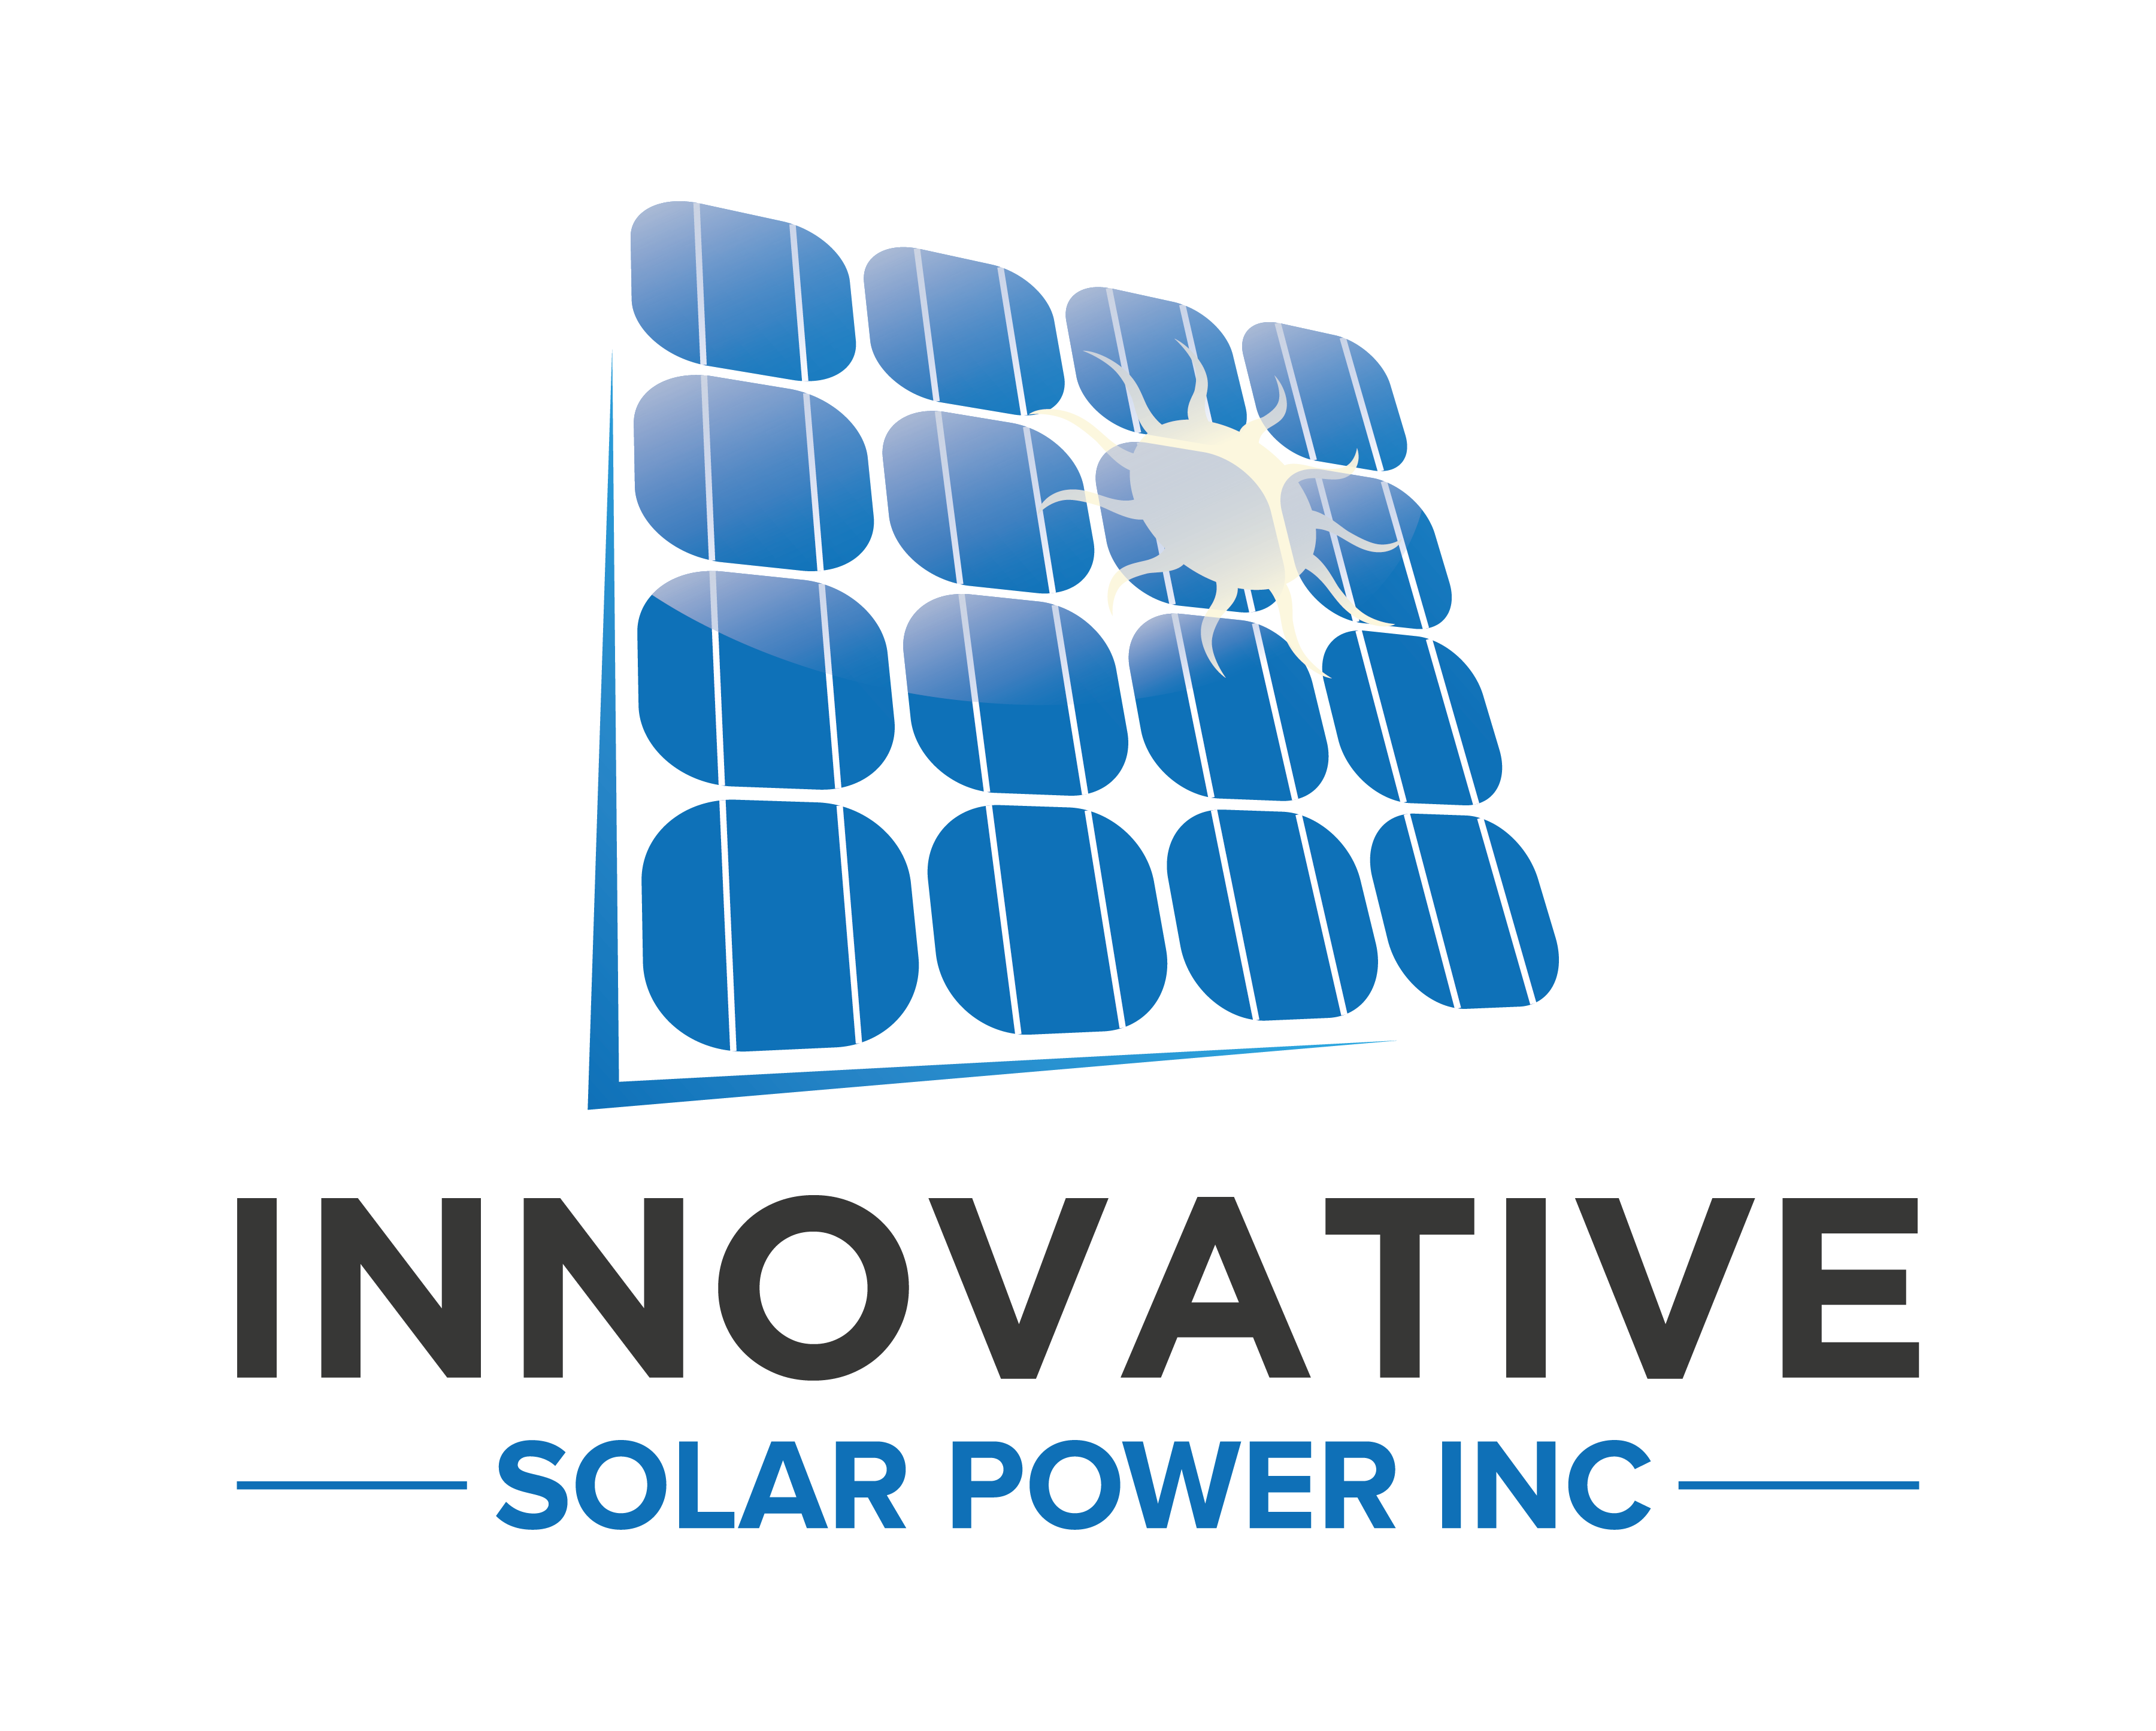 Innovative Solar Power Inc logo